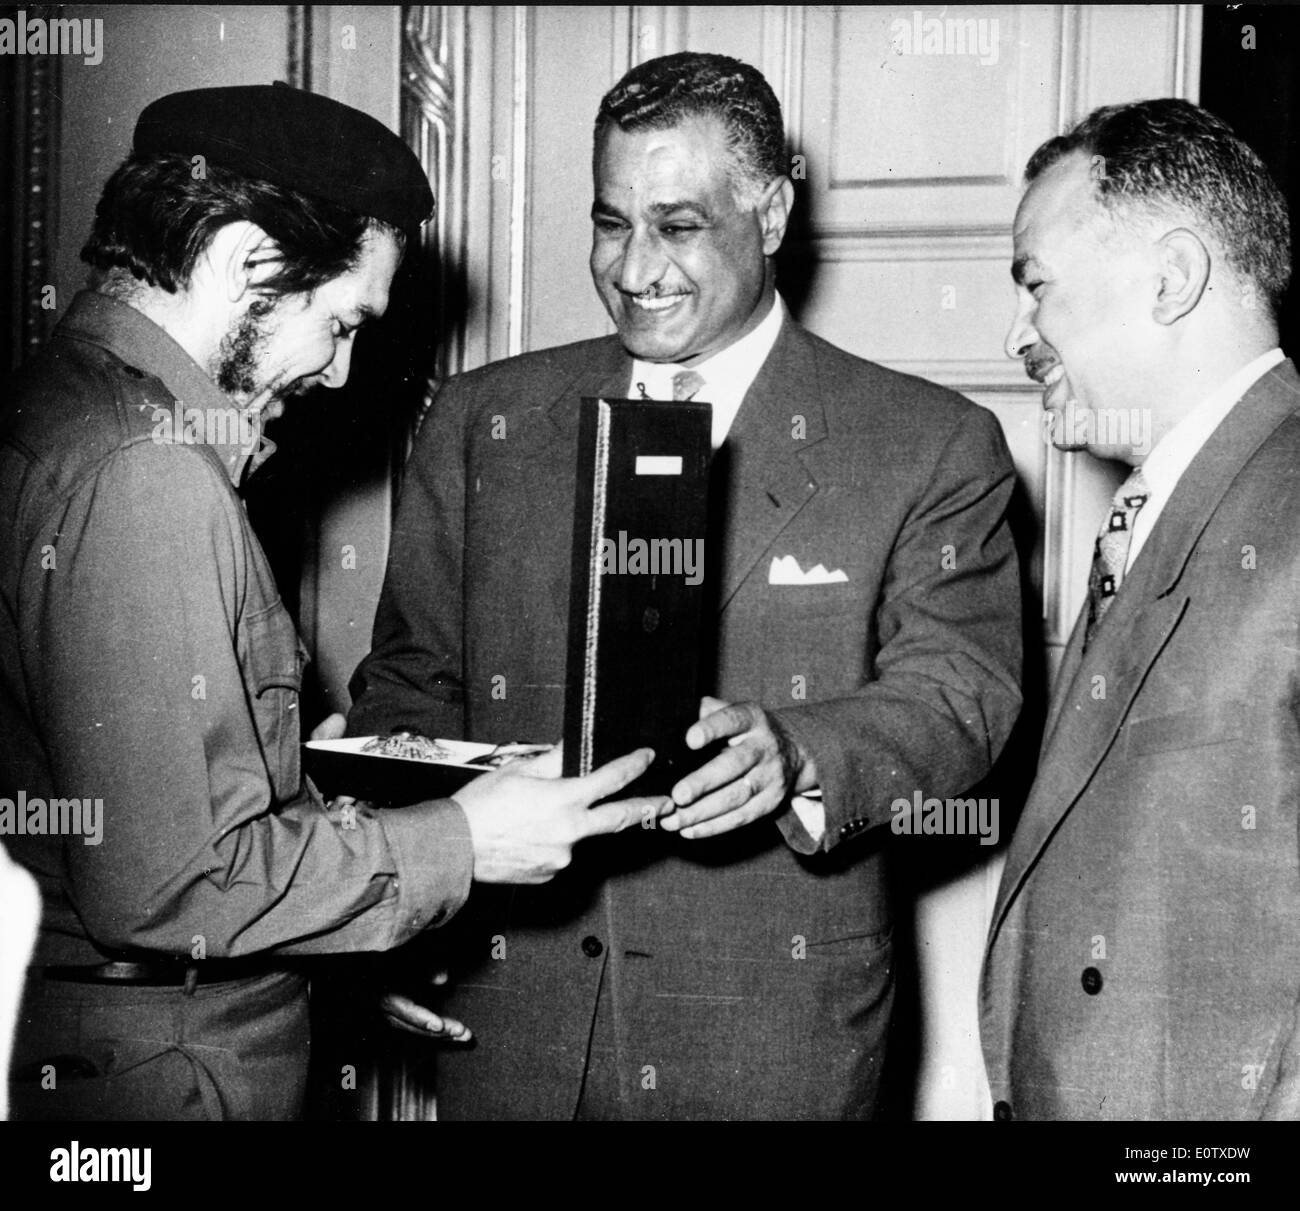 Cuban revolutionary Che Guevara receiving an award Stock Photo